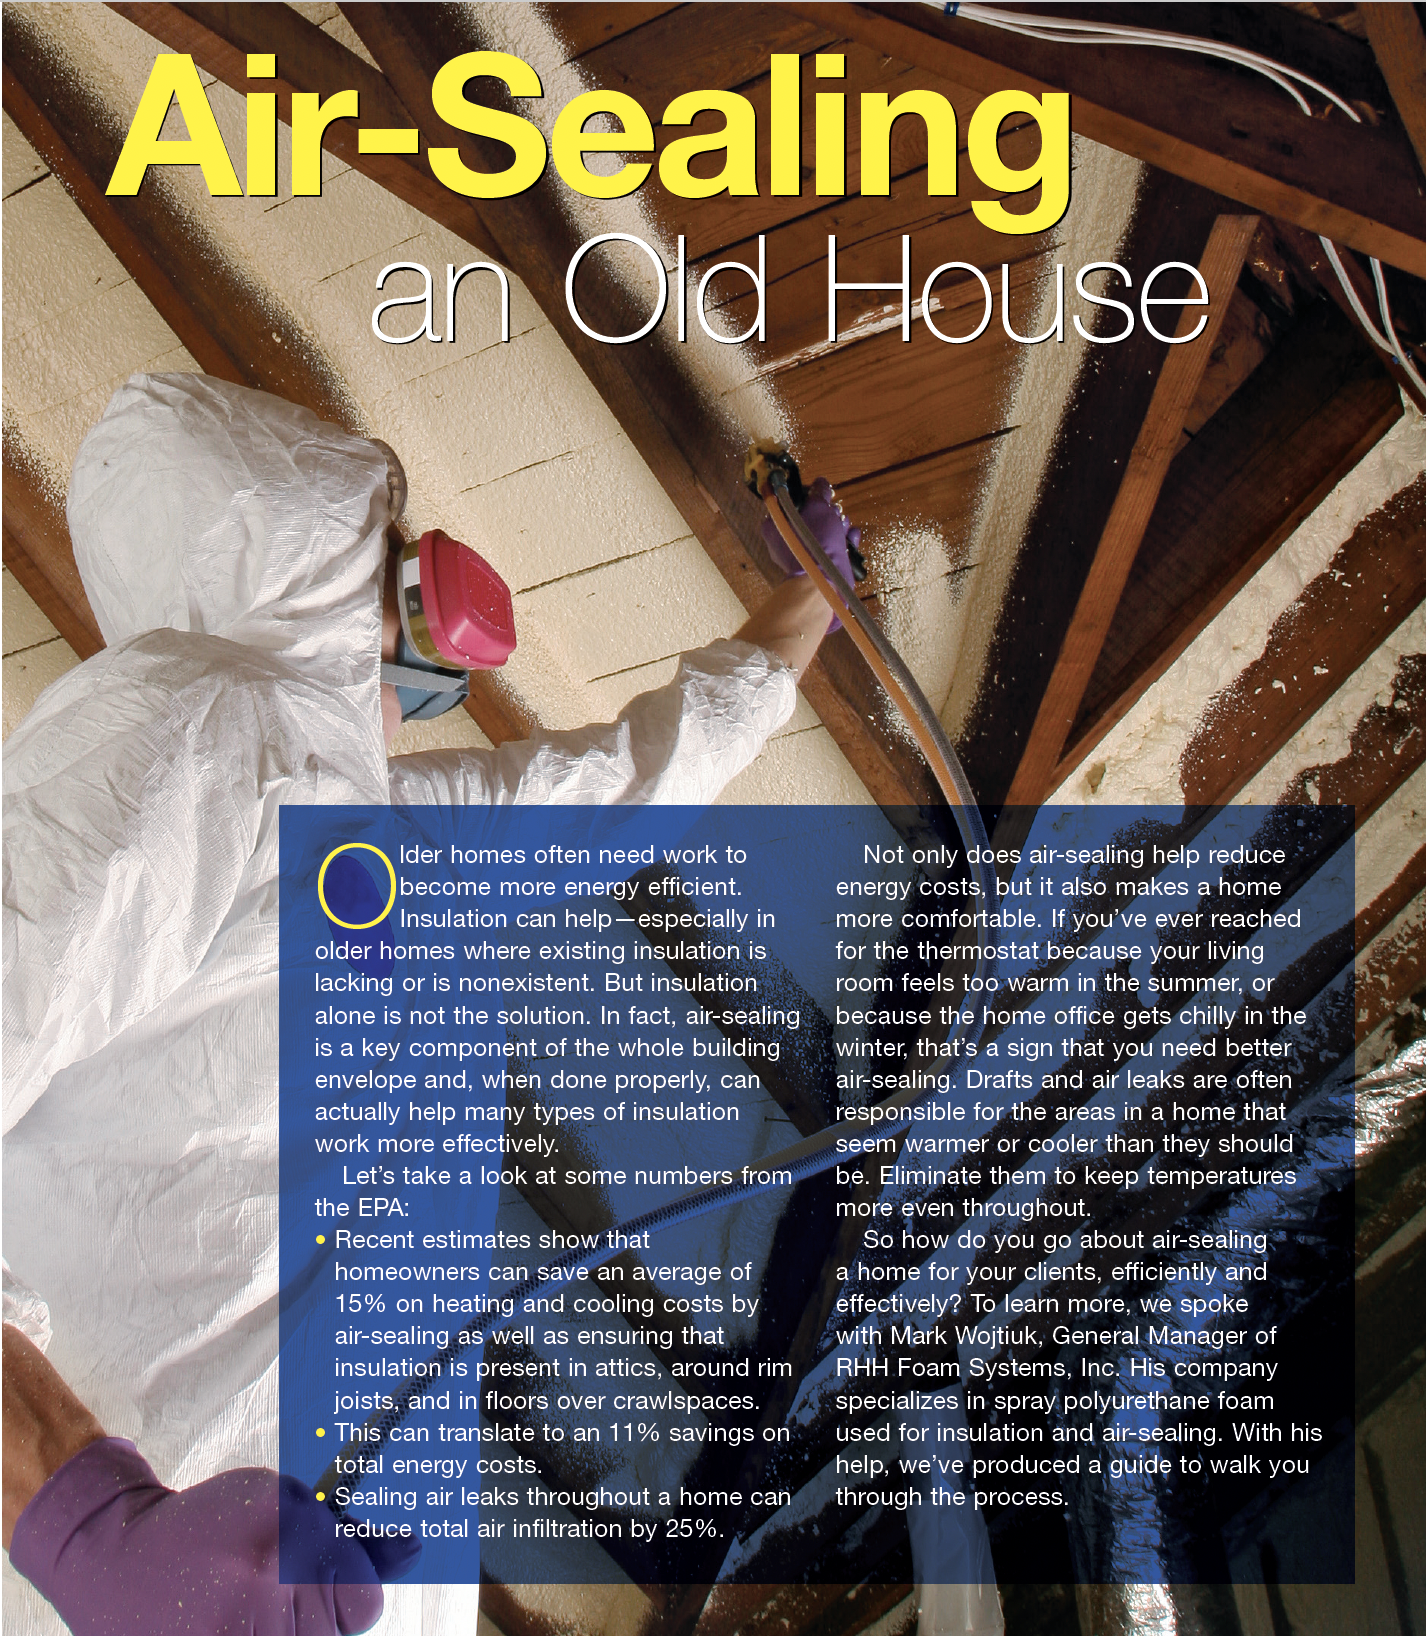 air-sealing an old house